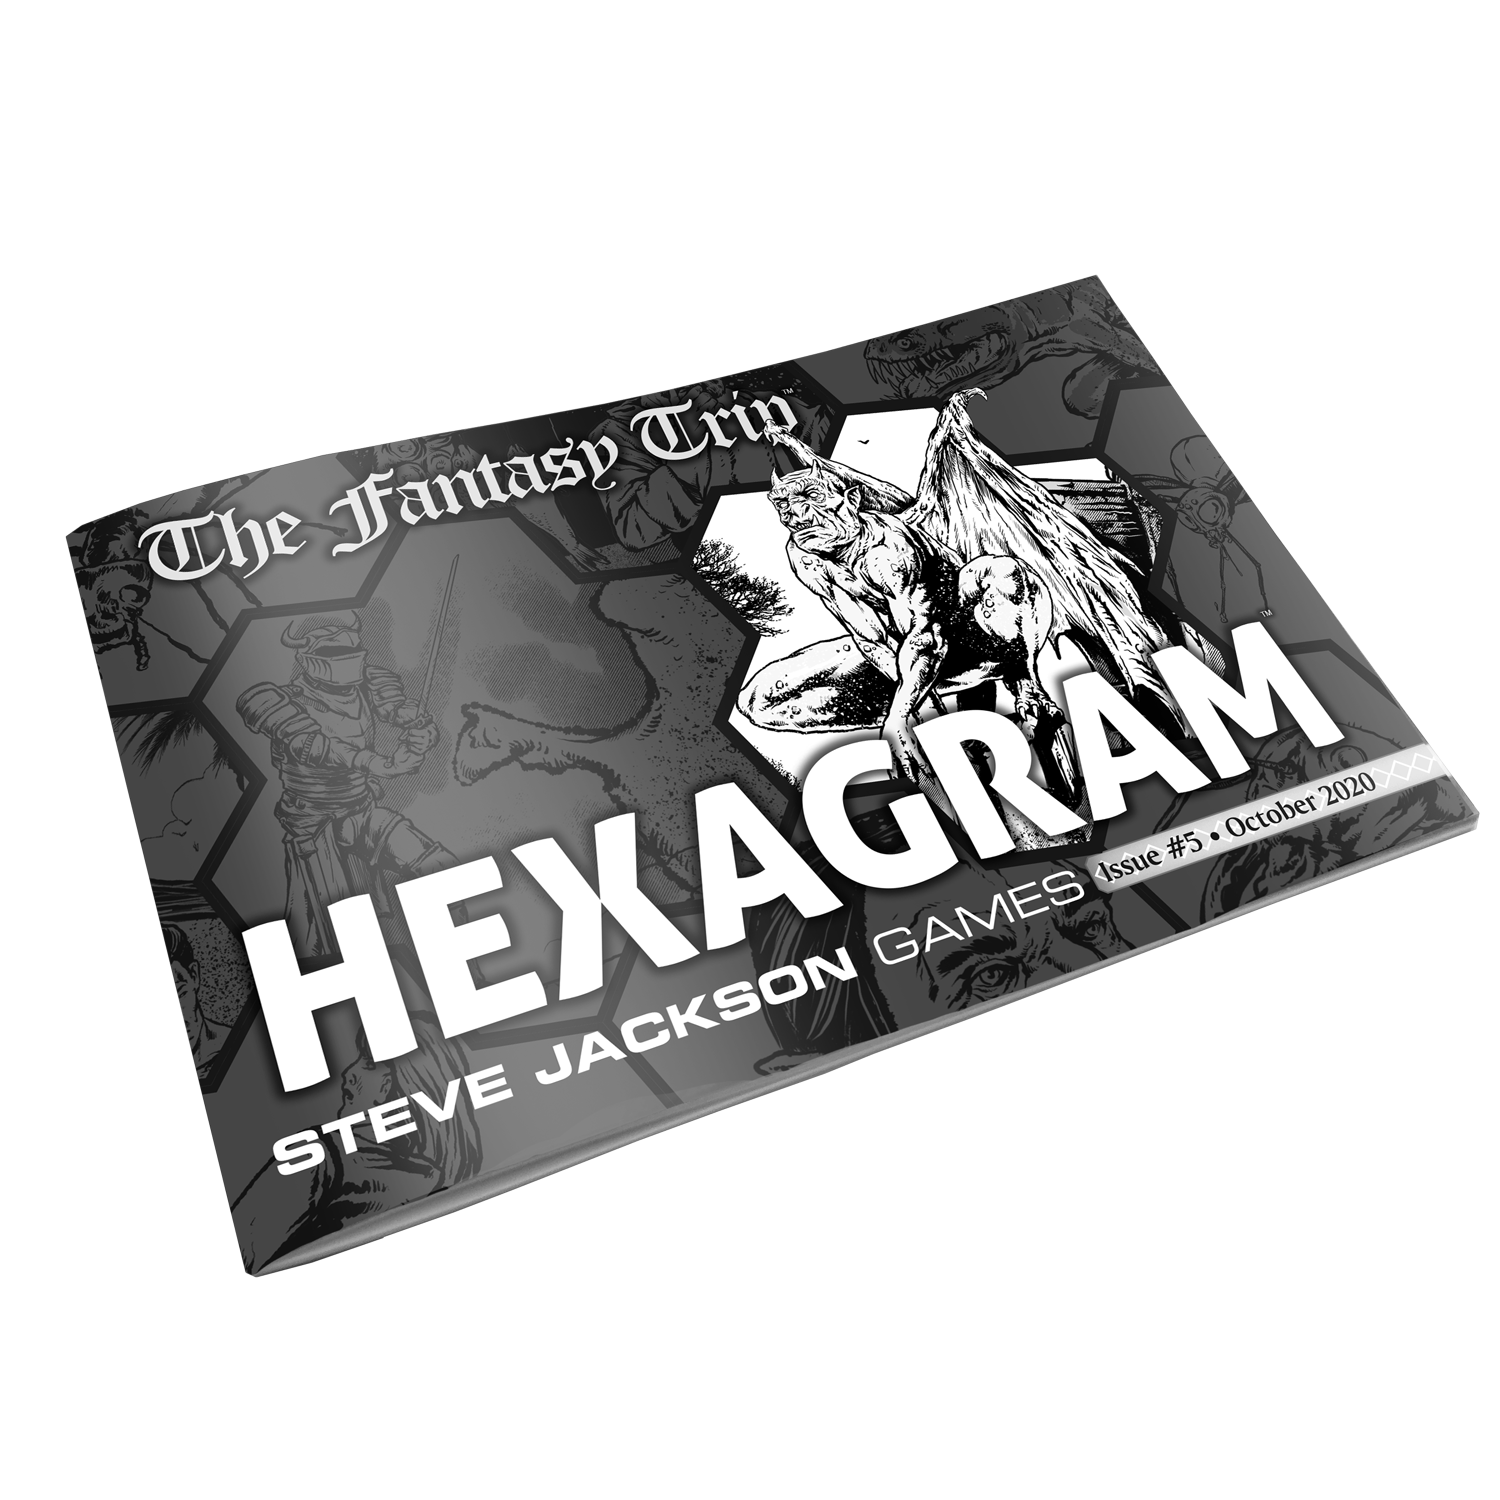 Hexagram – Issue #5